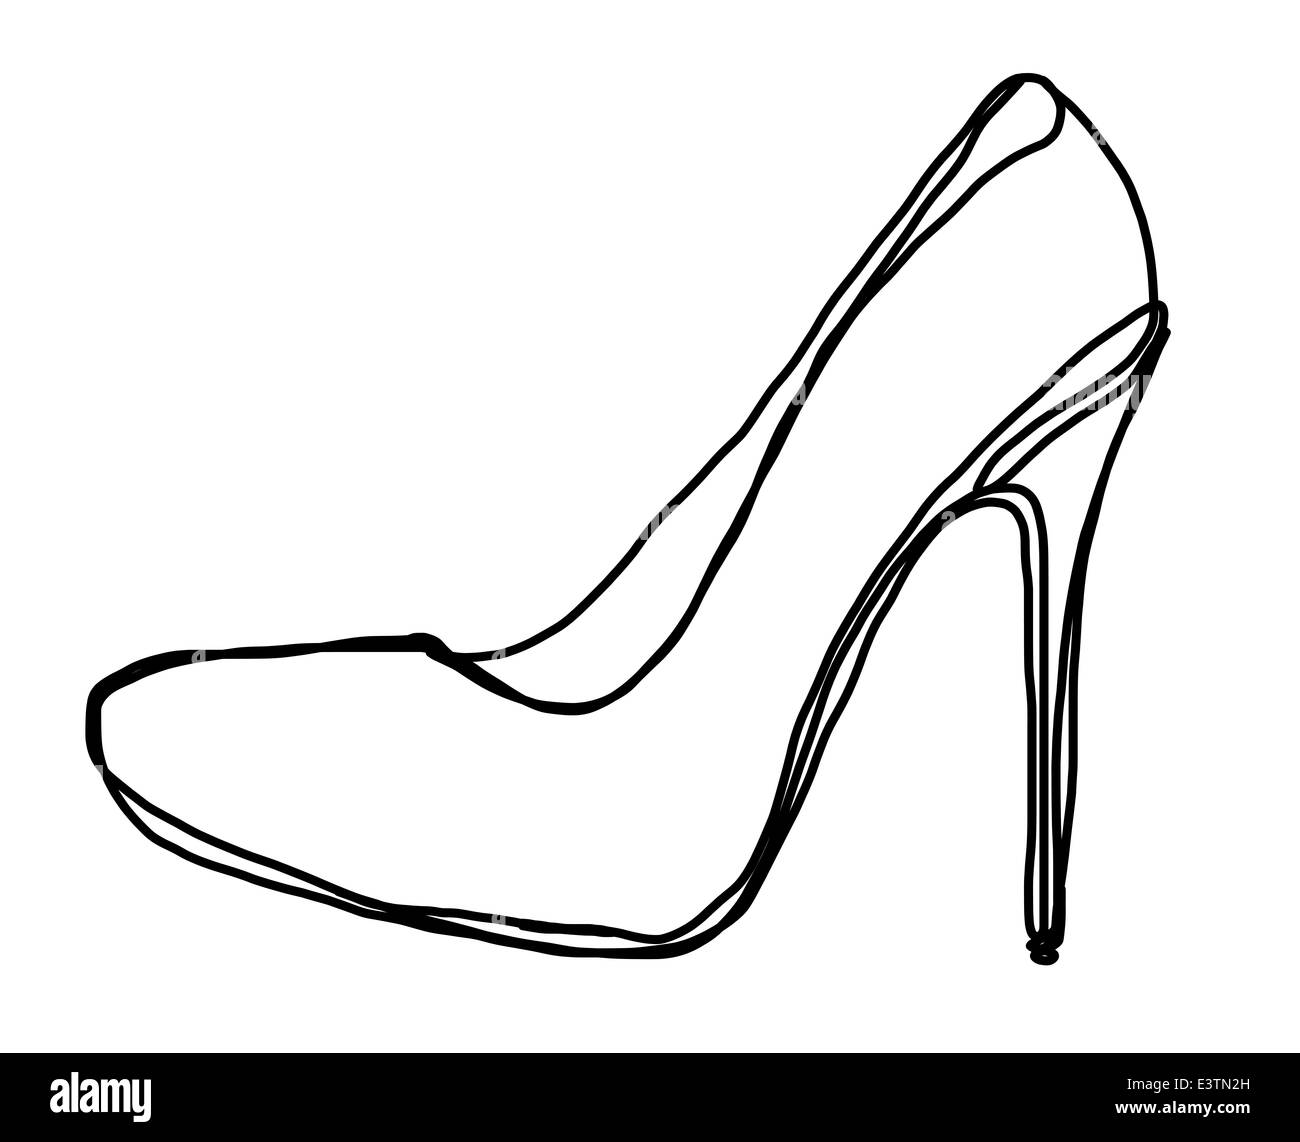 Illustration of a high heel shoe Stock Photo